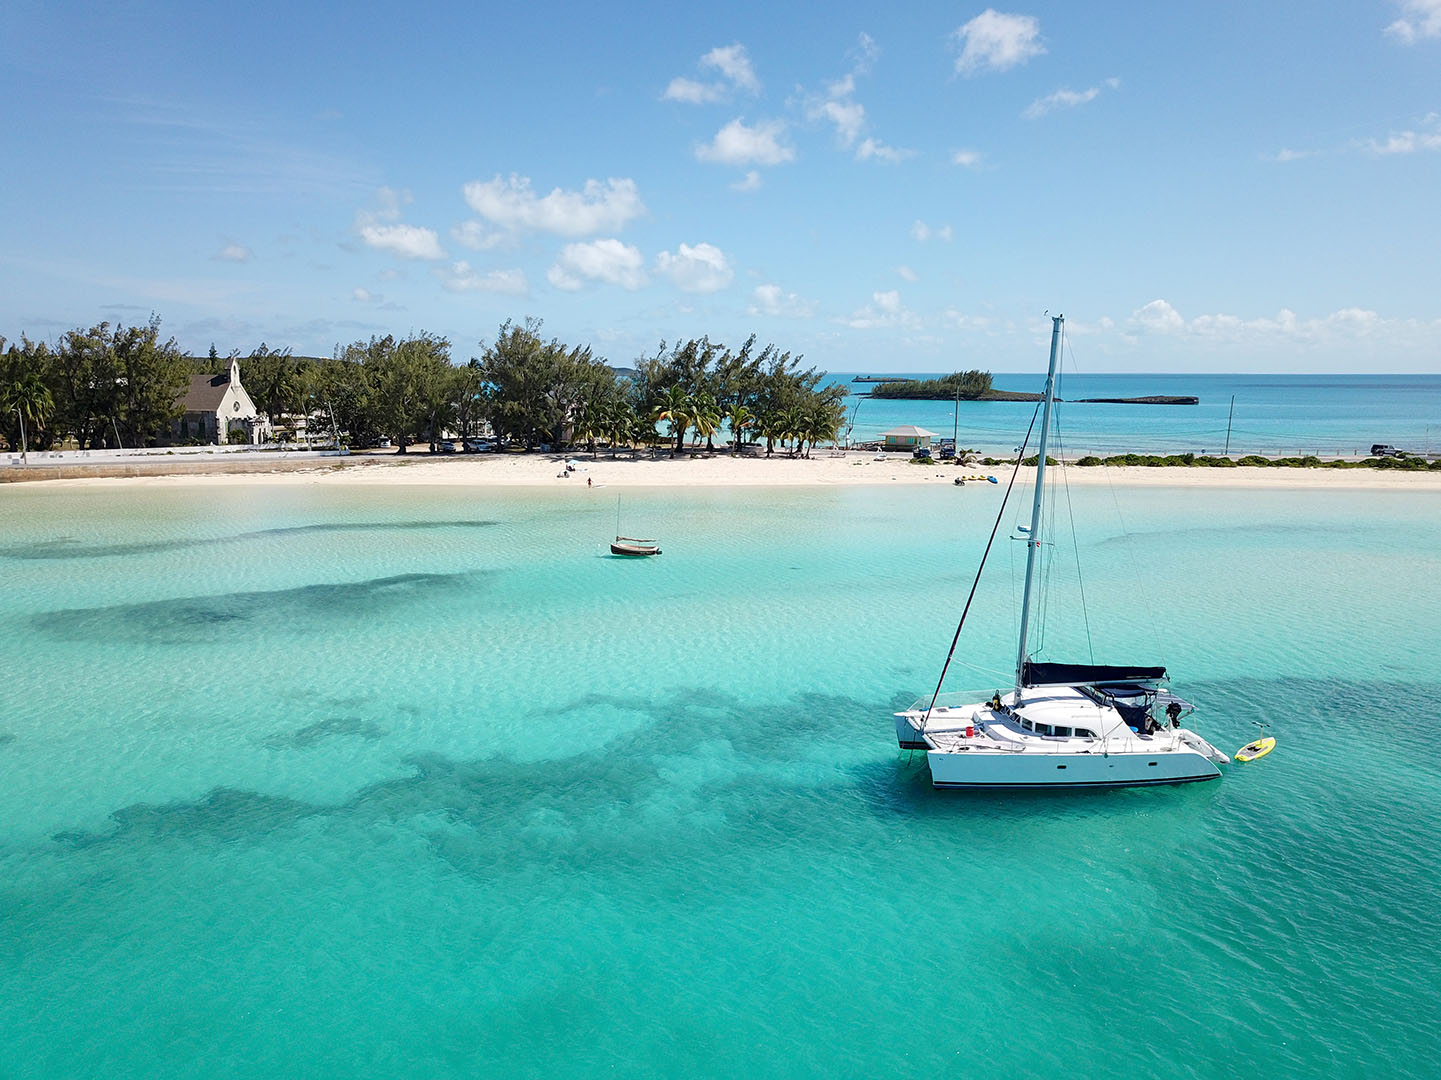 New partnership brings luxury vacation homes to Bahamas